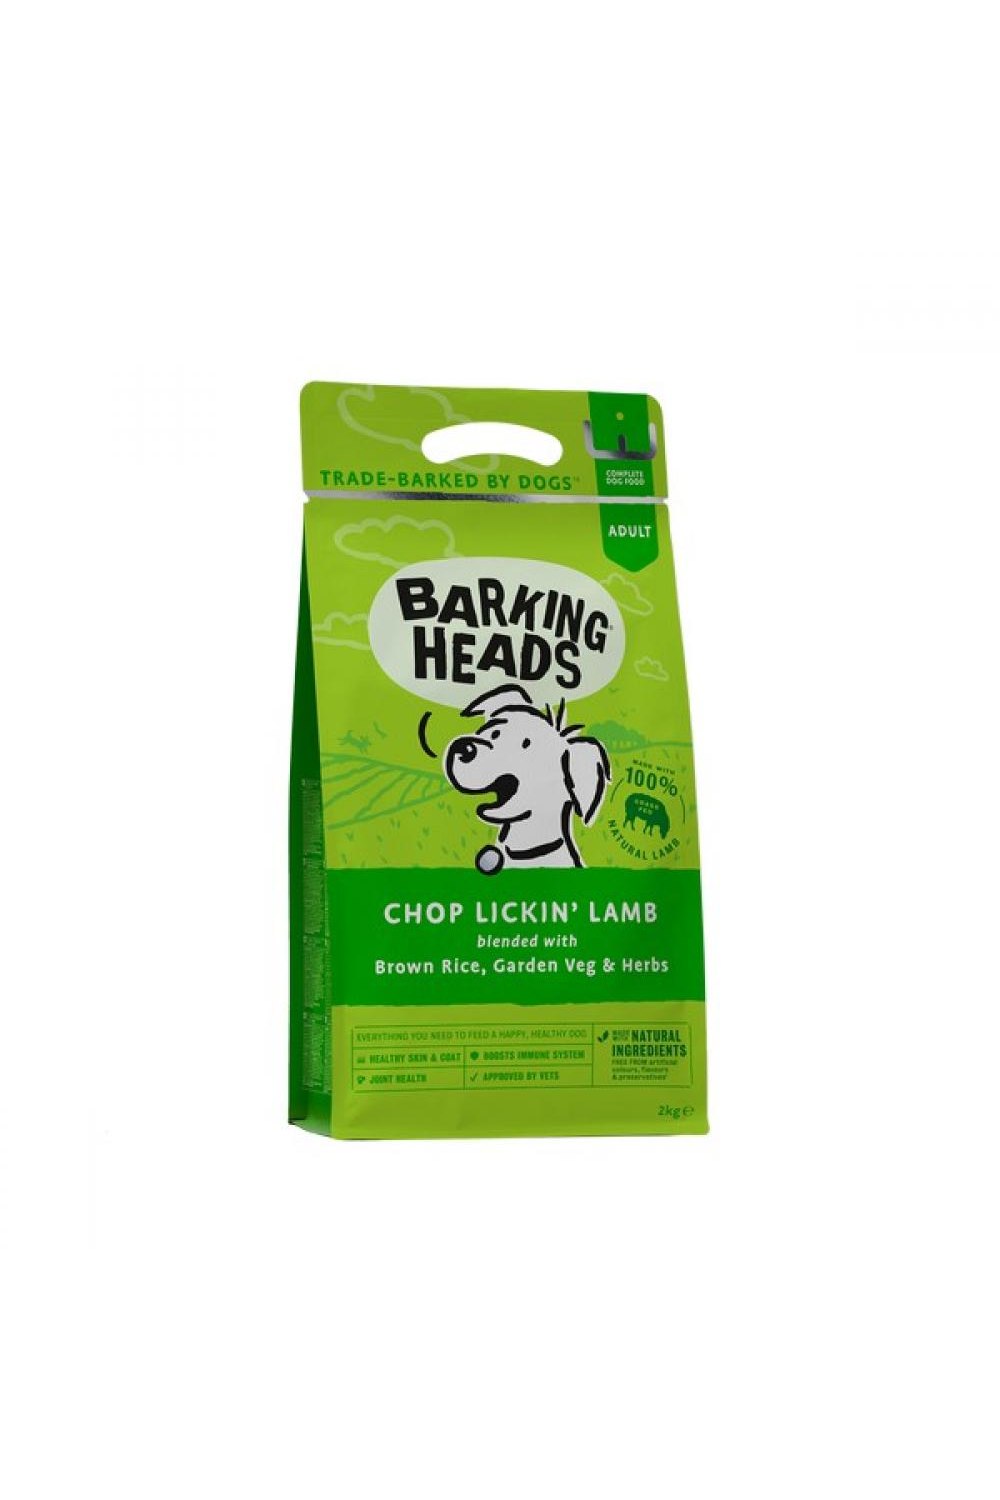 Barking Heads Chop Lickin Lamb Complete Dry Dog Food (May Vary) (4.4lb)